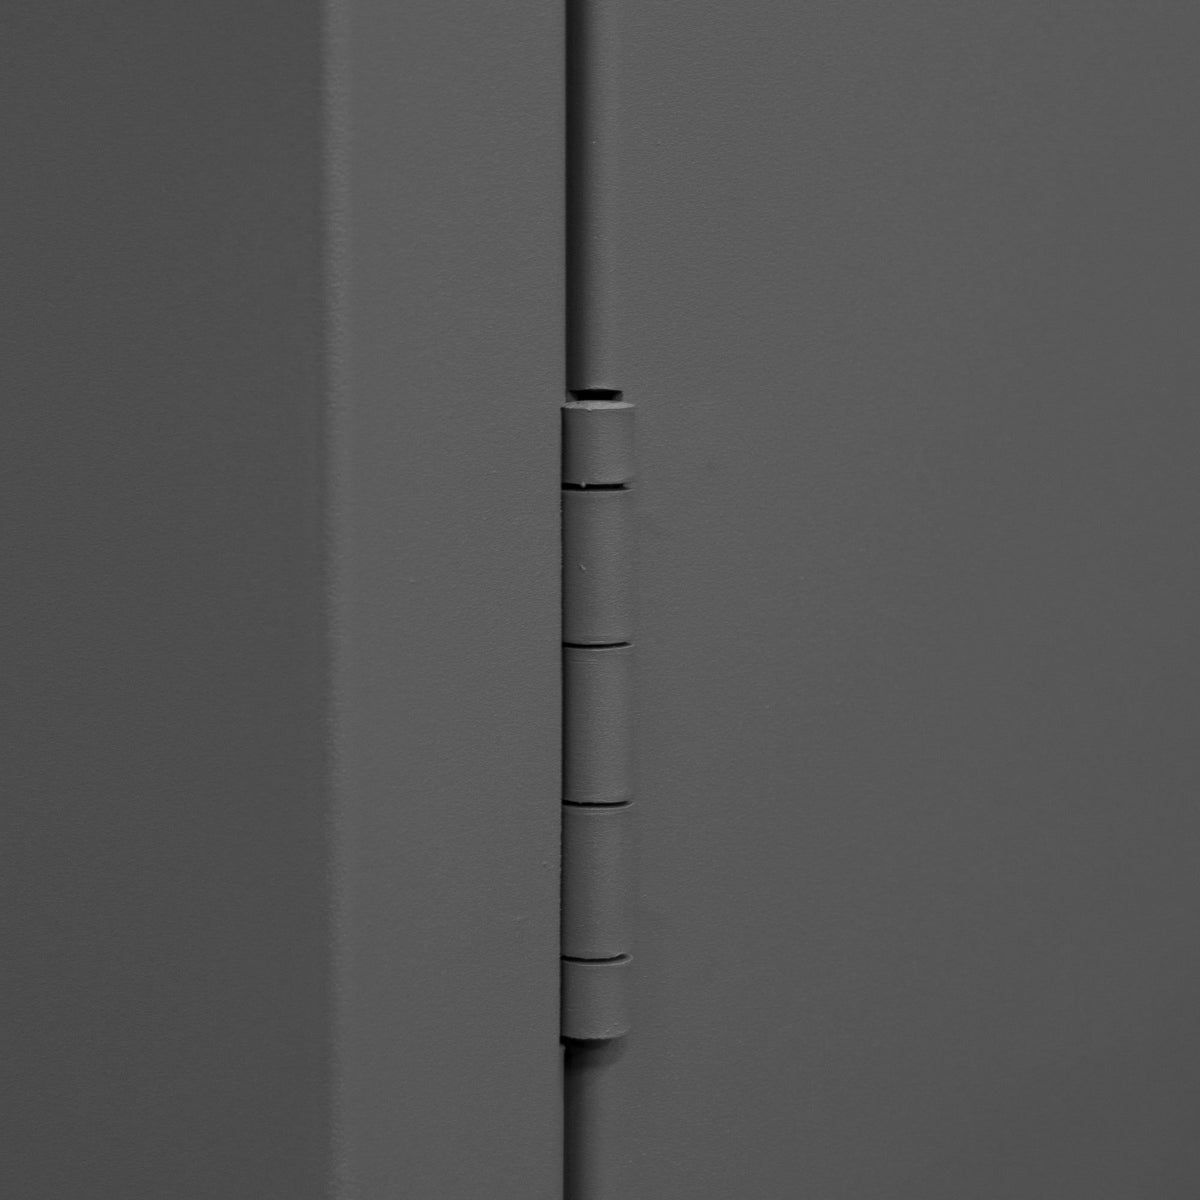 Dim Gray Durham 5 Shelves Wardrobe Cabinet with Hanger Bar 36 X 24 X 78